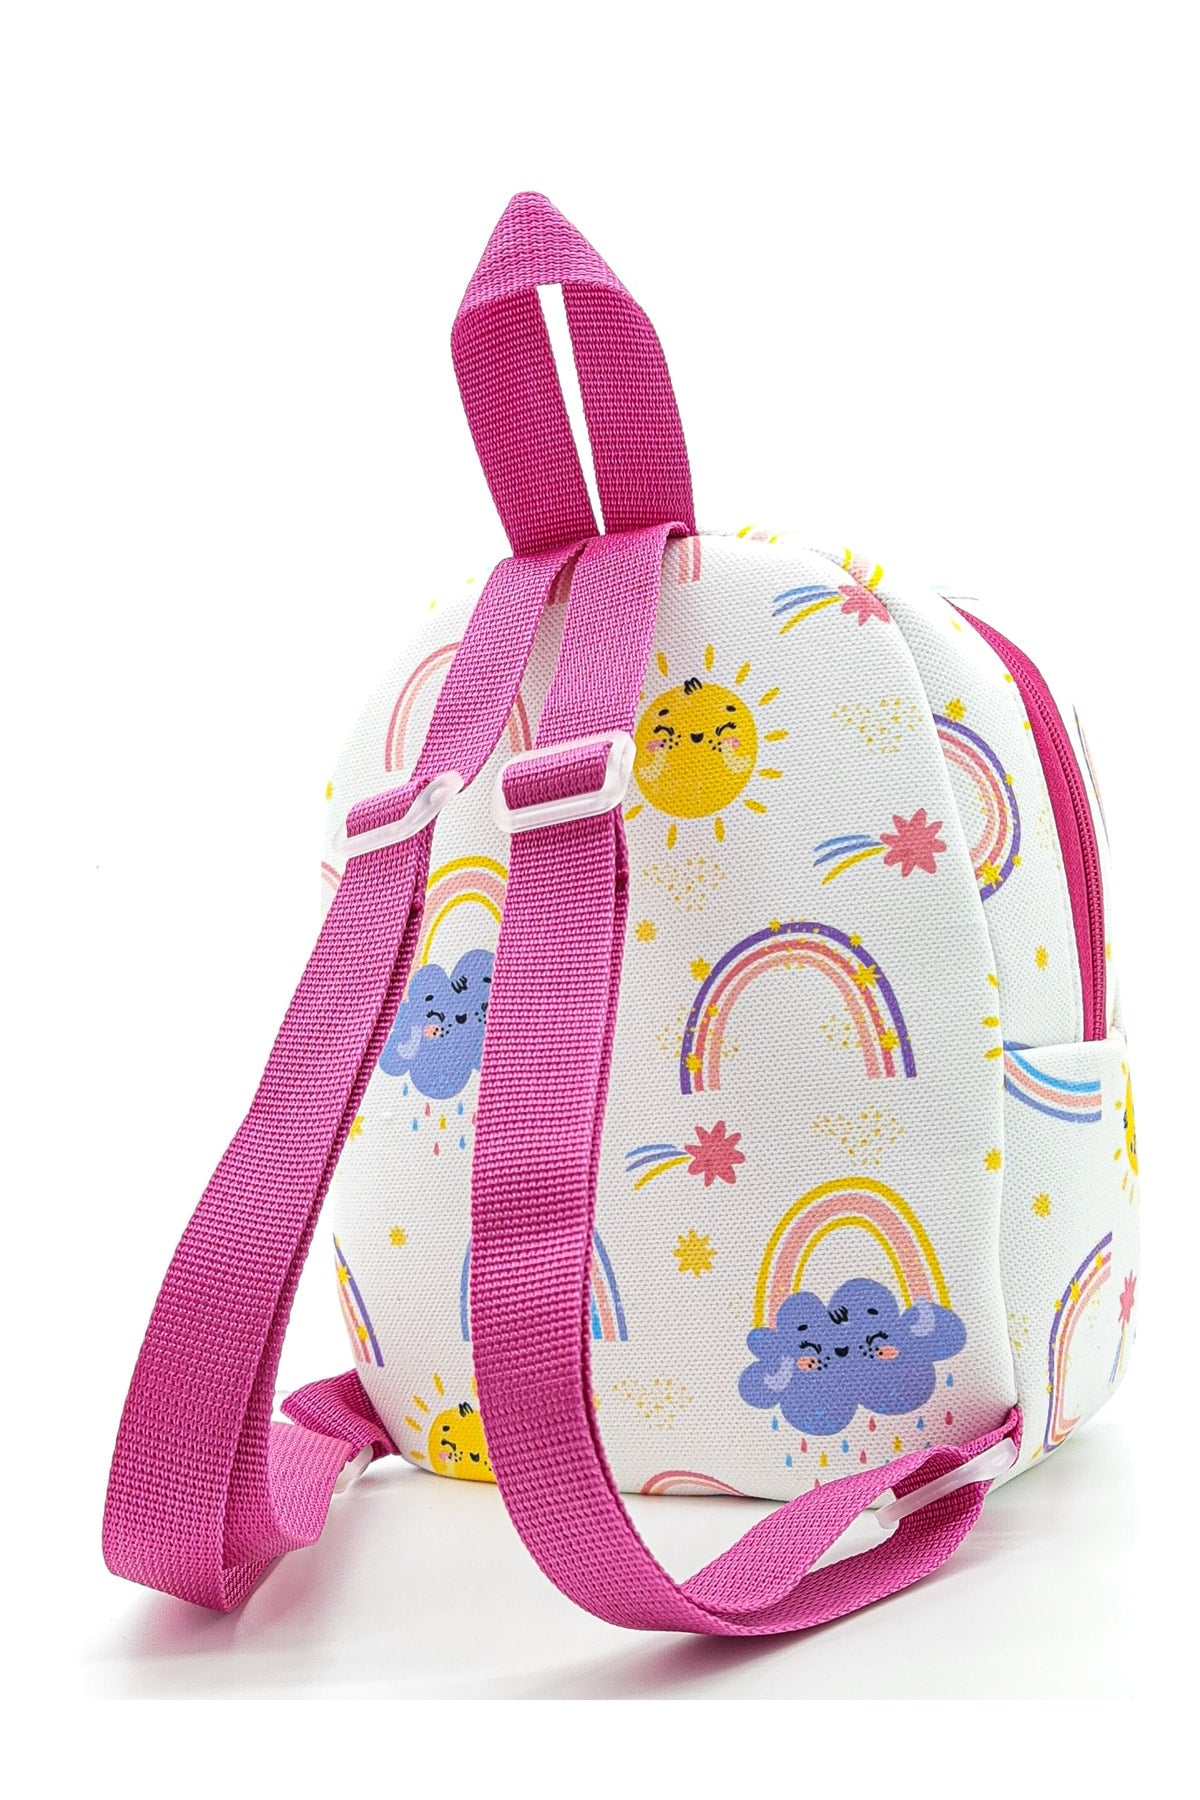 [ We Write Any Name You Want ] Happy Sky 0-8 Years Old Child Backpack, Kindergarten-Nursery Bag